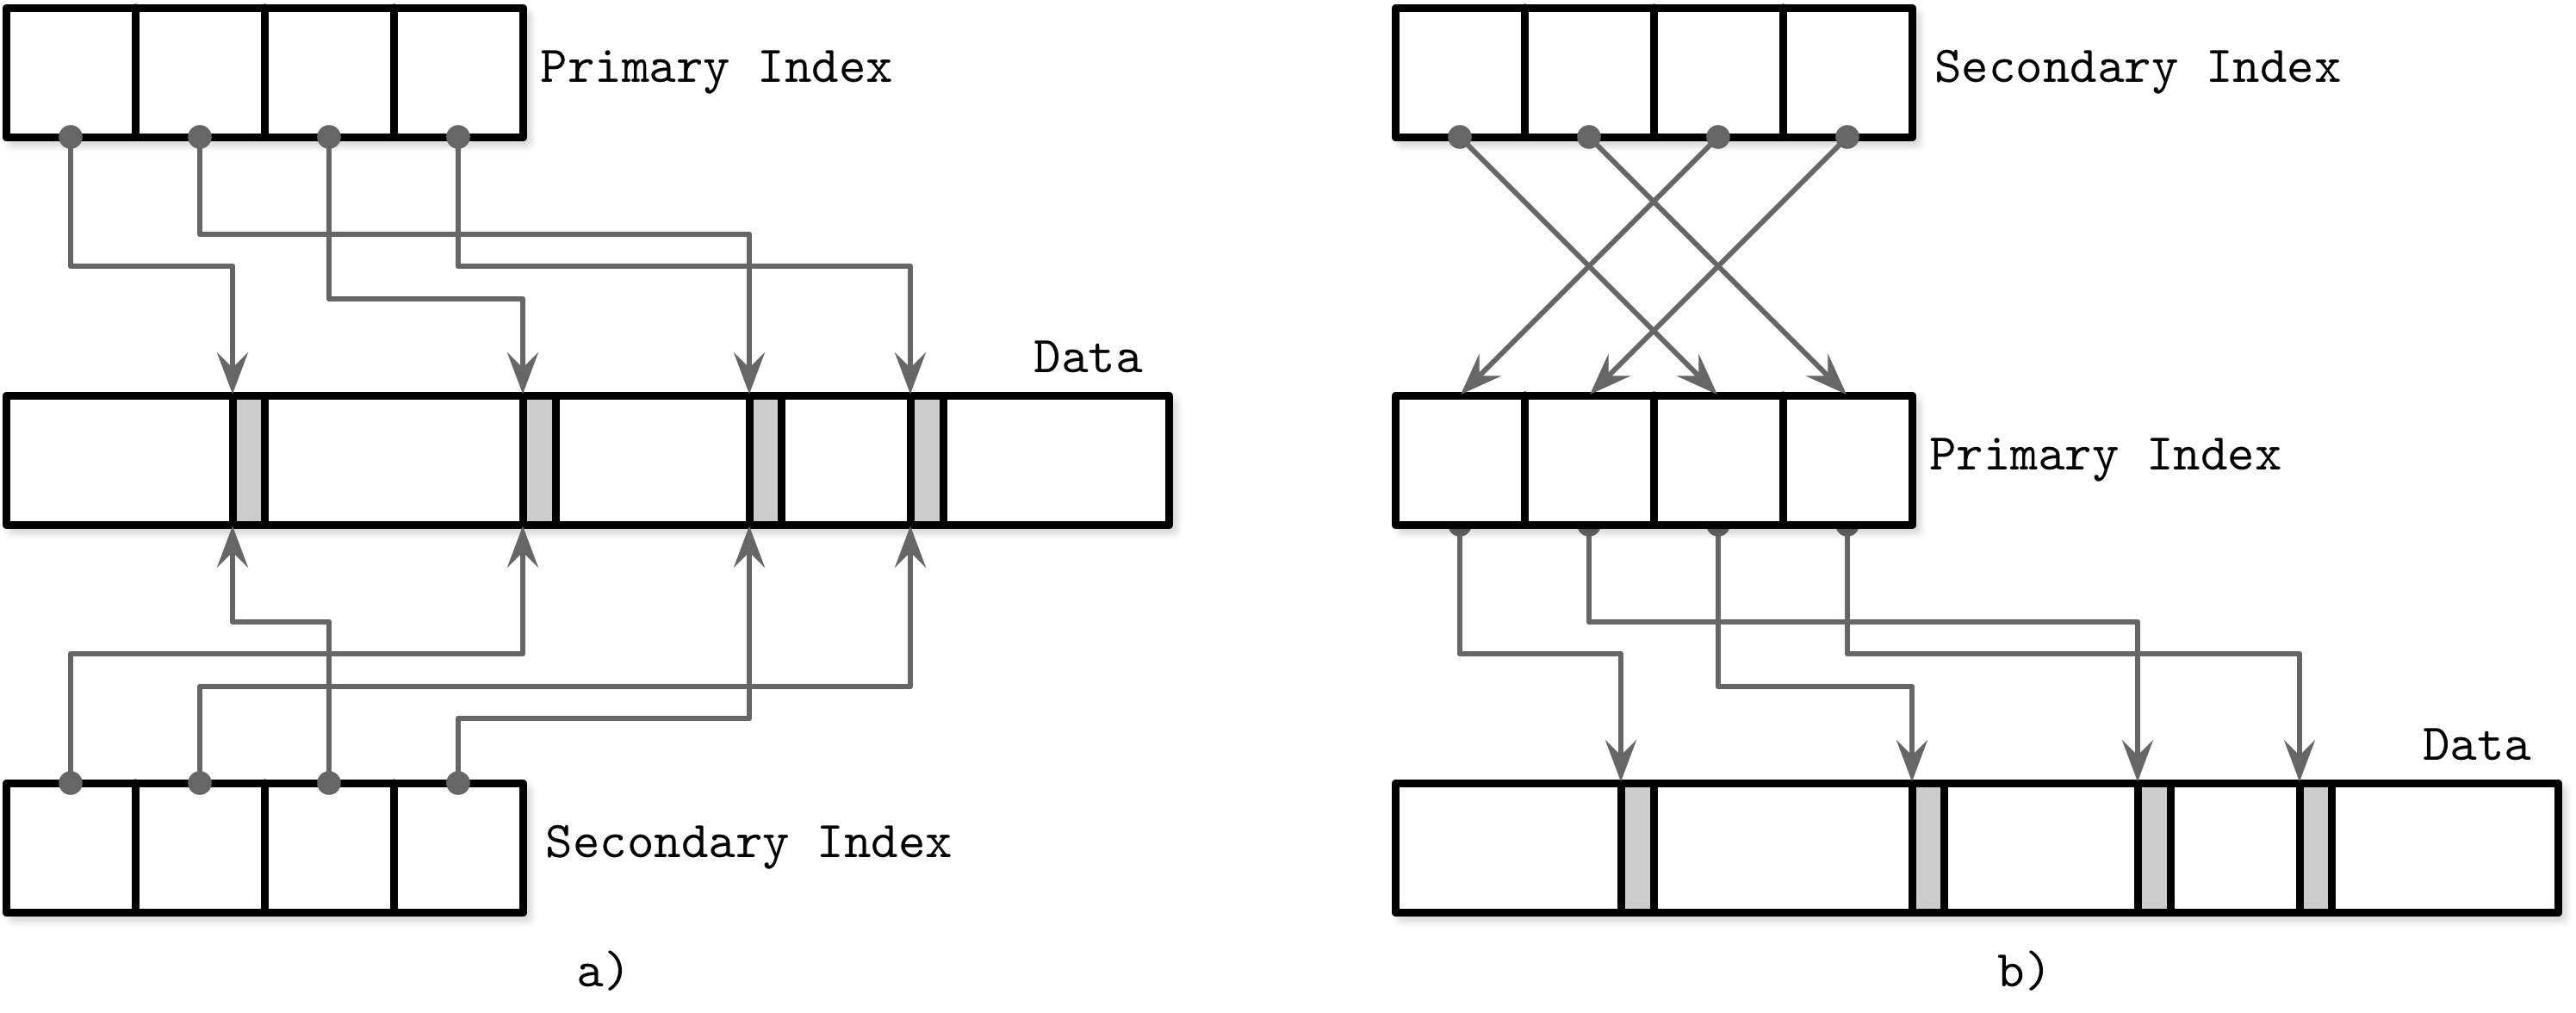 Secondary index